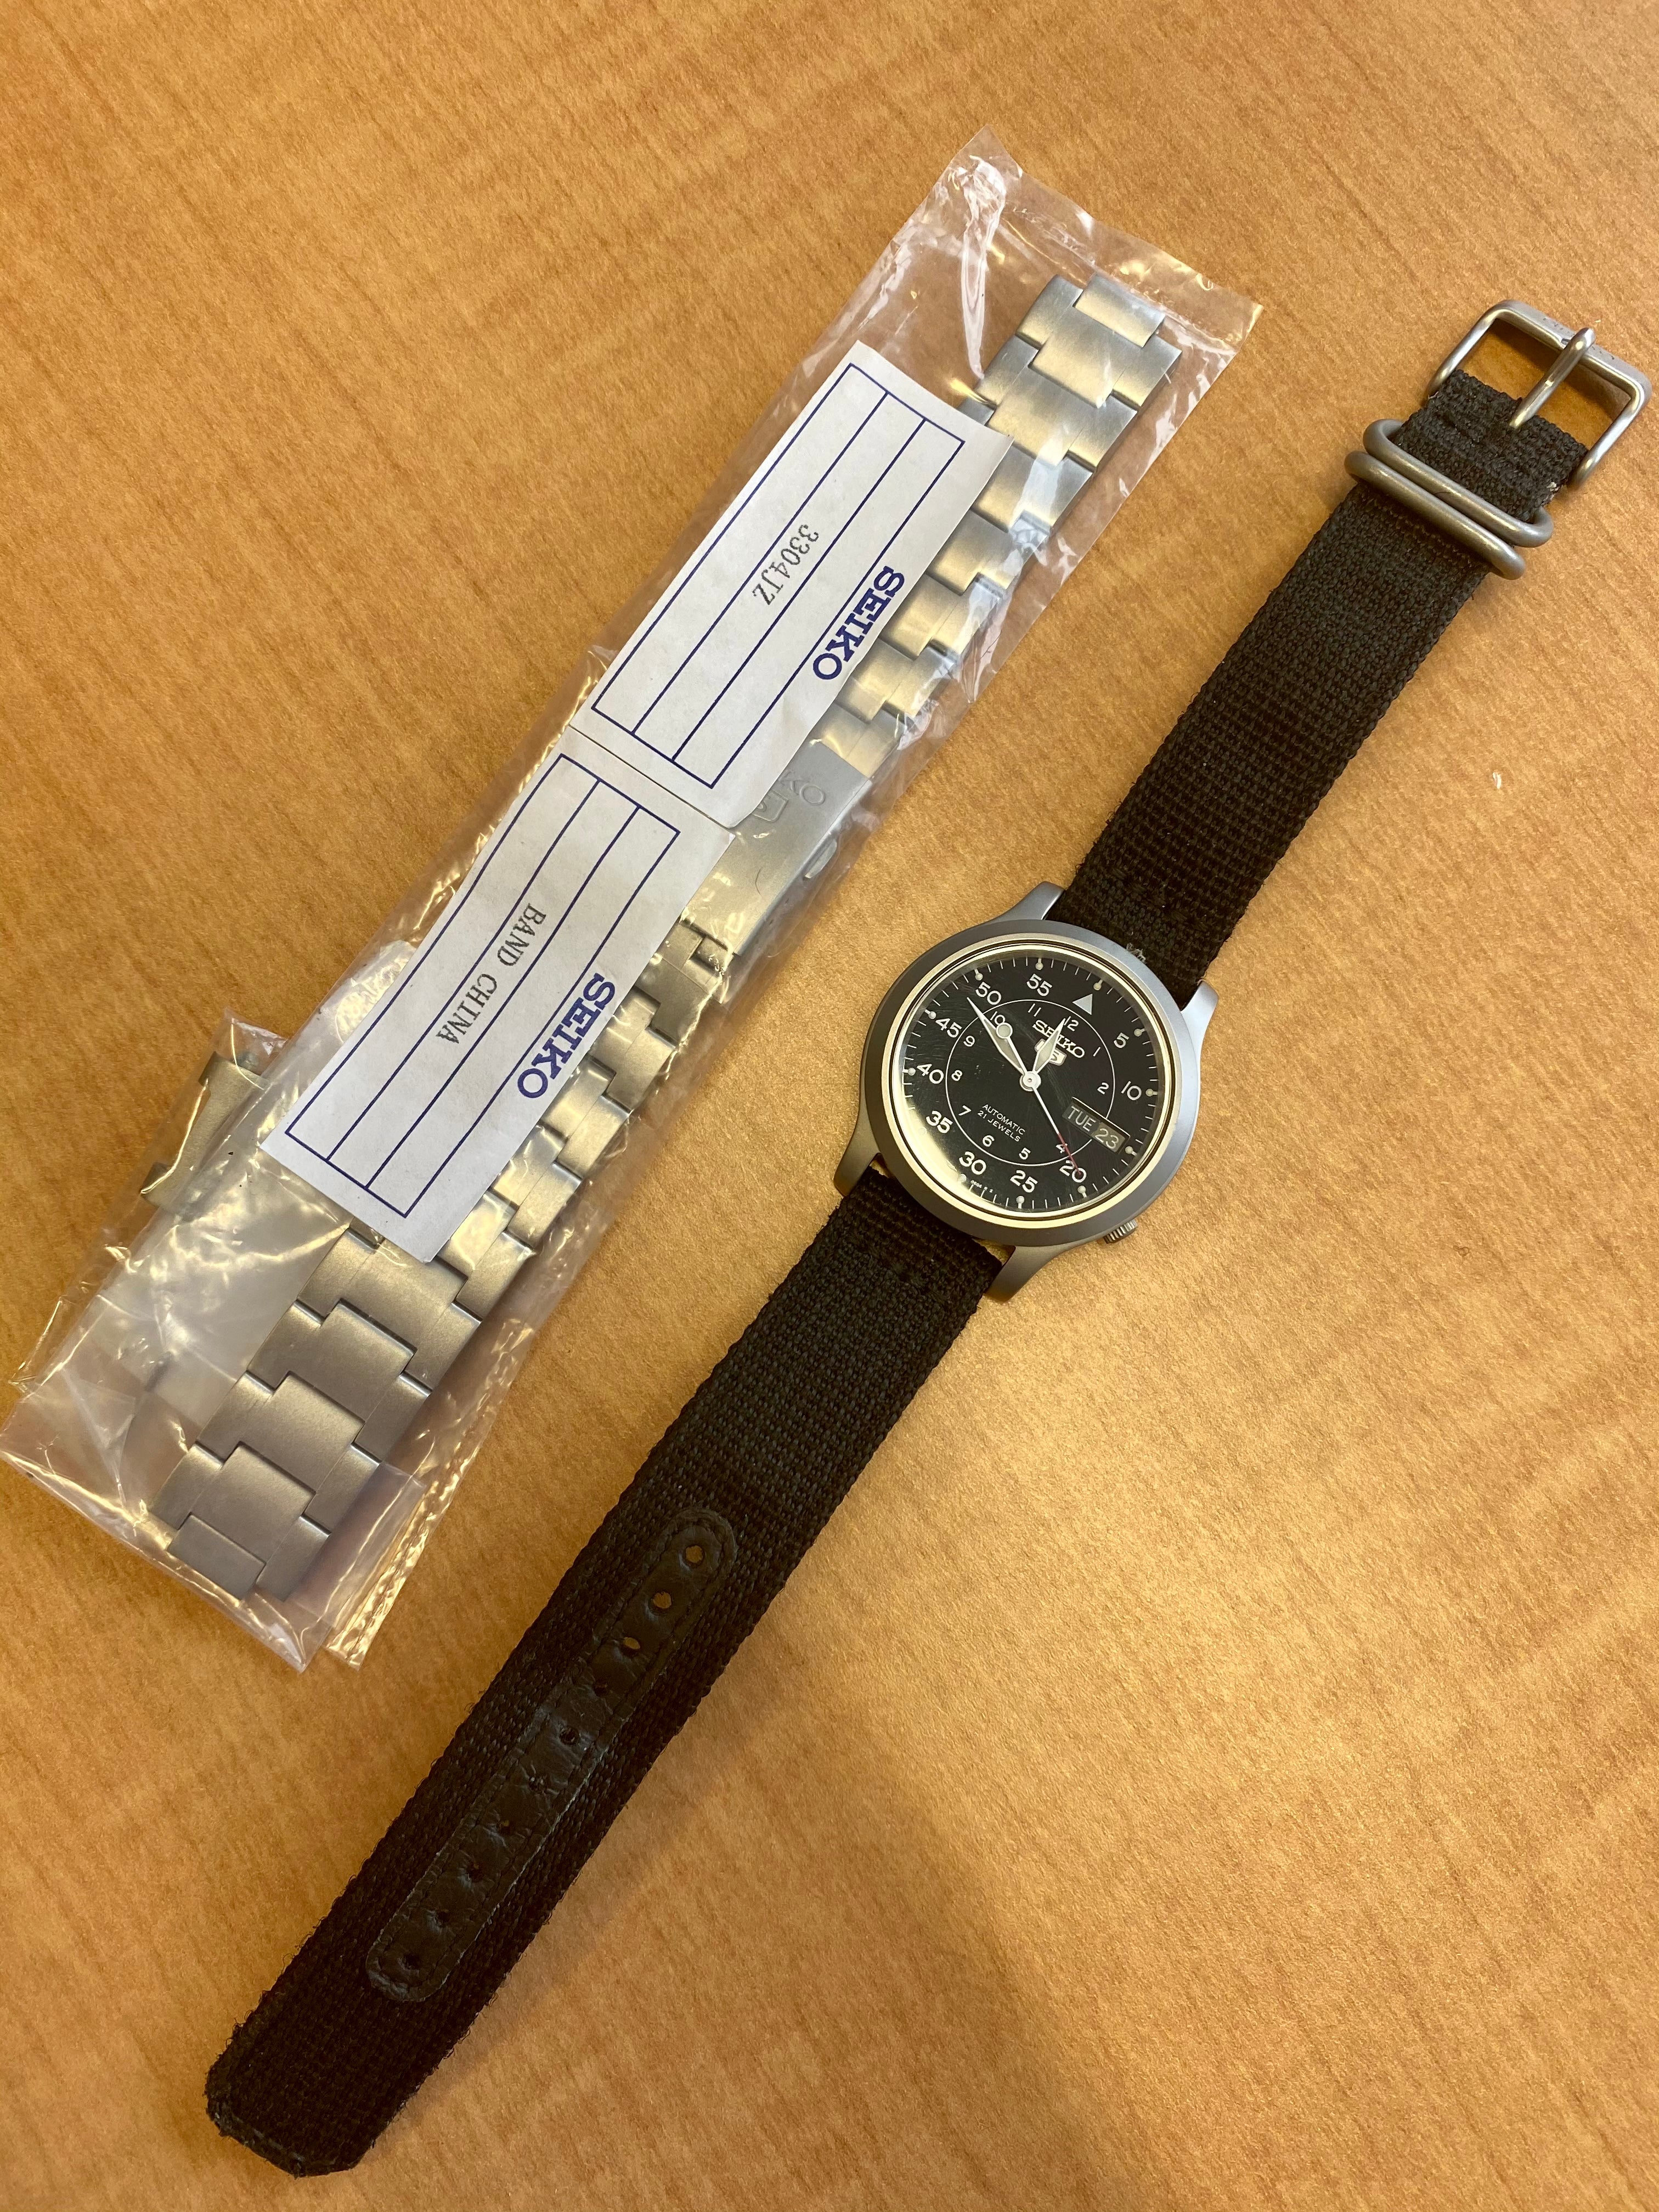 FS: Seiko 5 SNK809 with BNIB bracelet $79 shipped | WatchUSeek Watch Forums